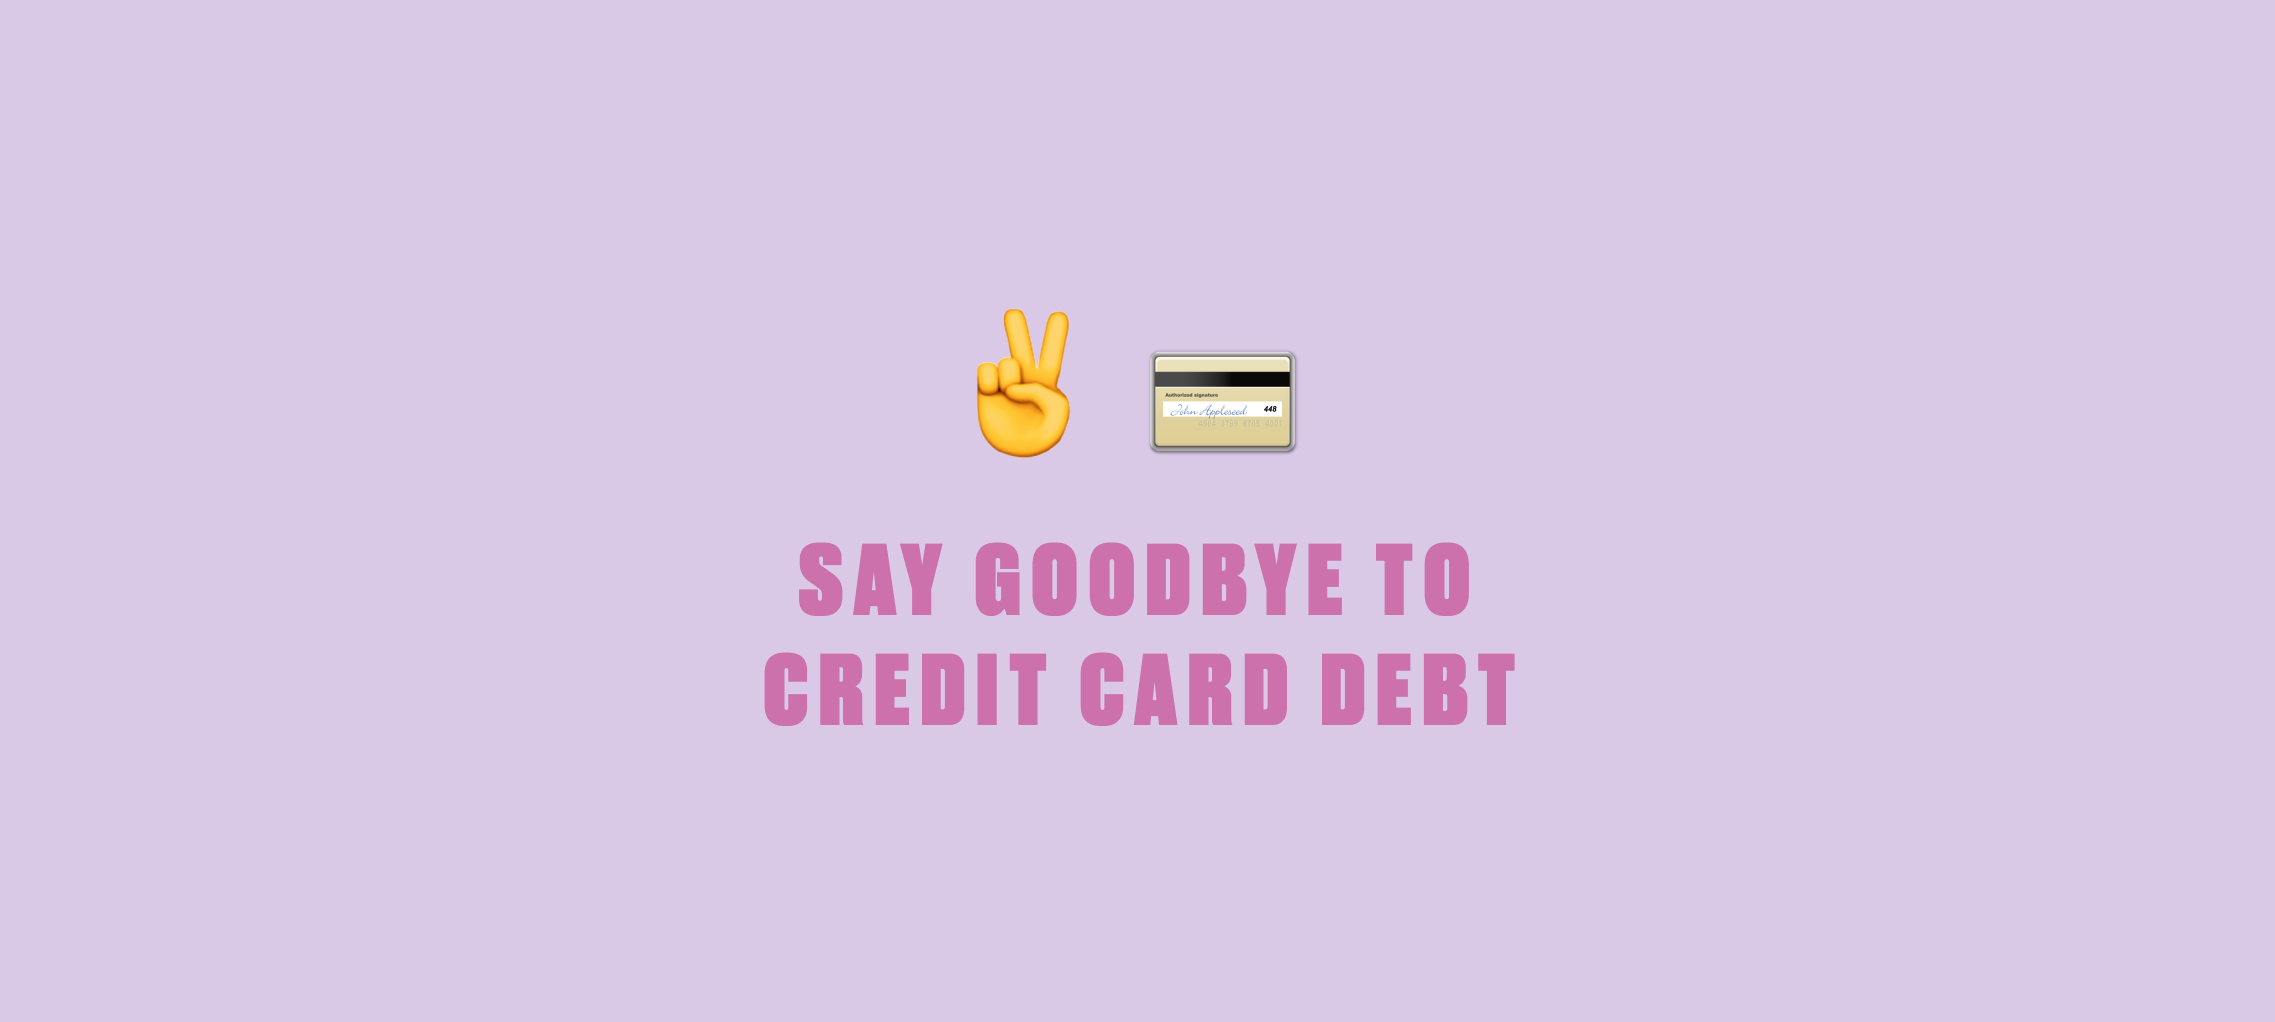 Say goodbye to credit card debt.